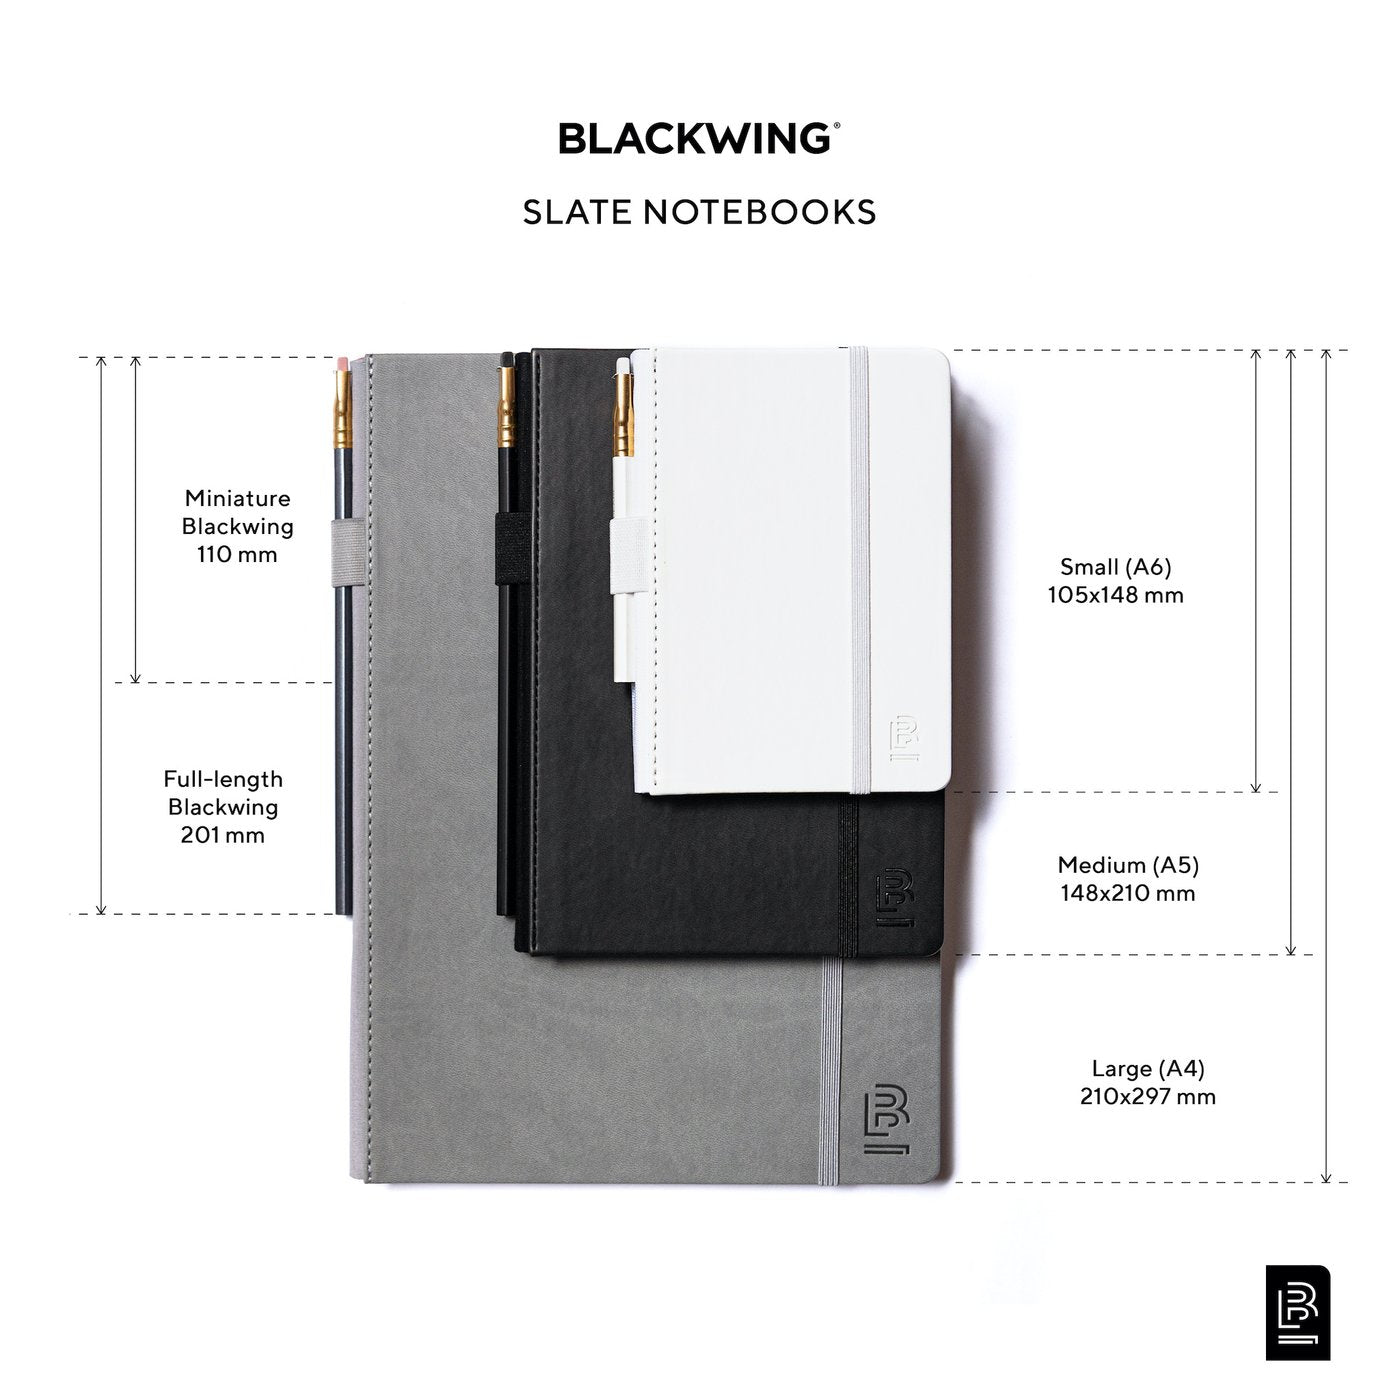 Blackwing Medium (A5) Slate Notebook- White